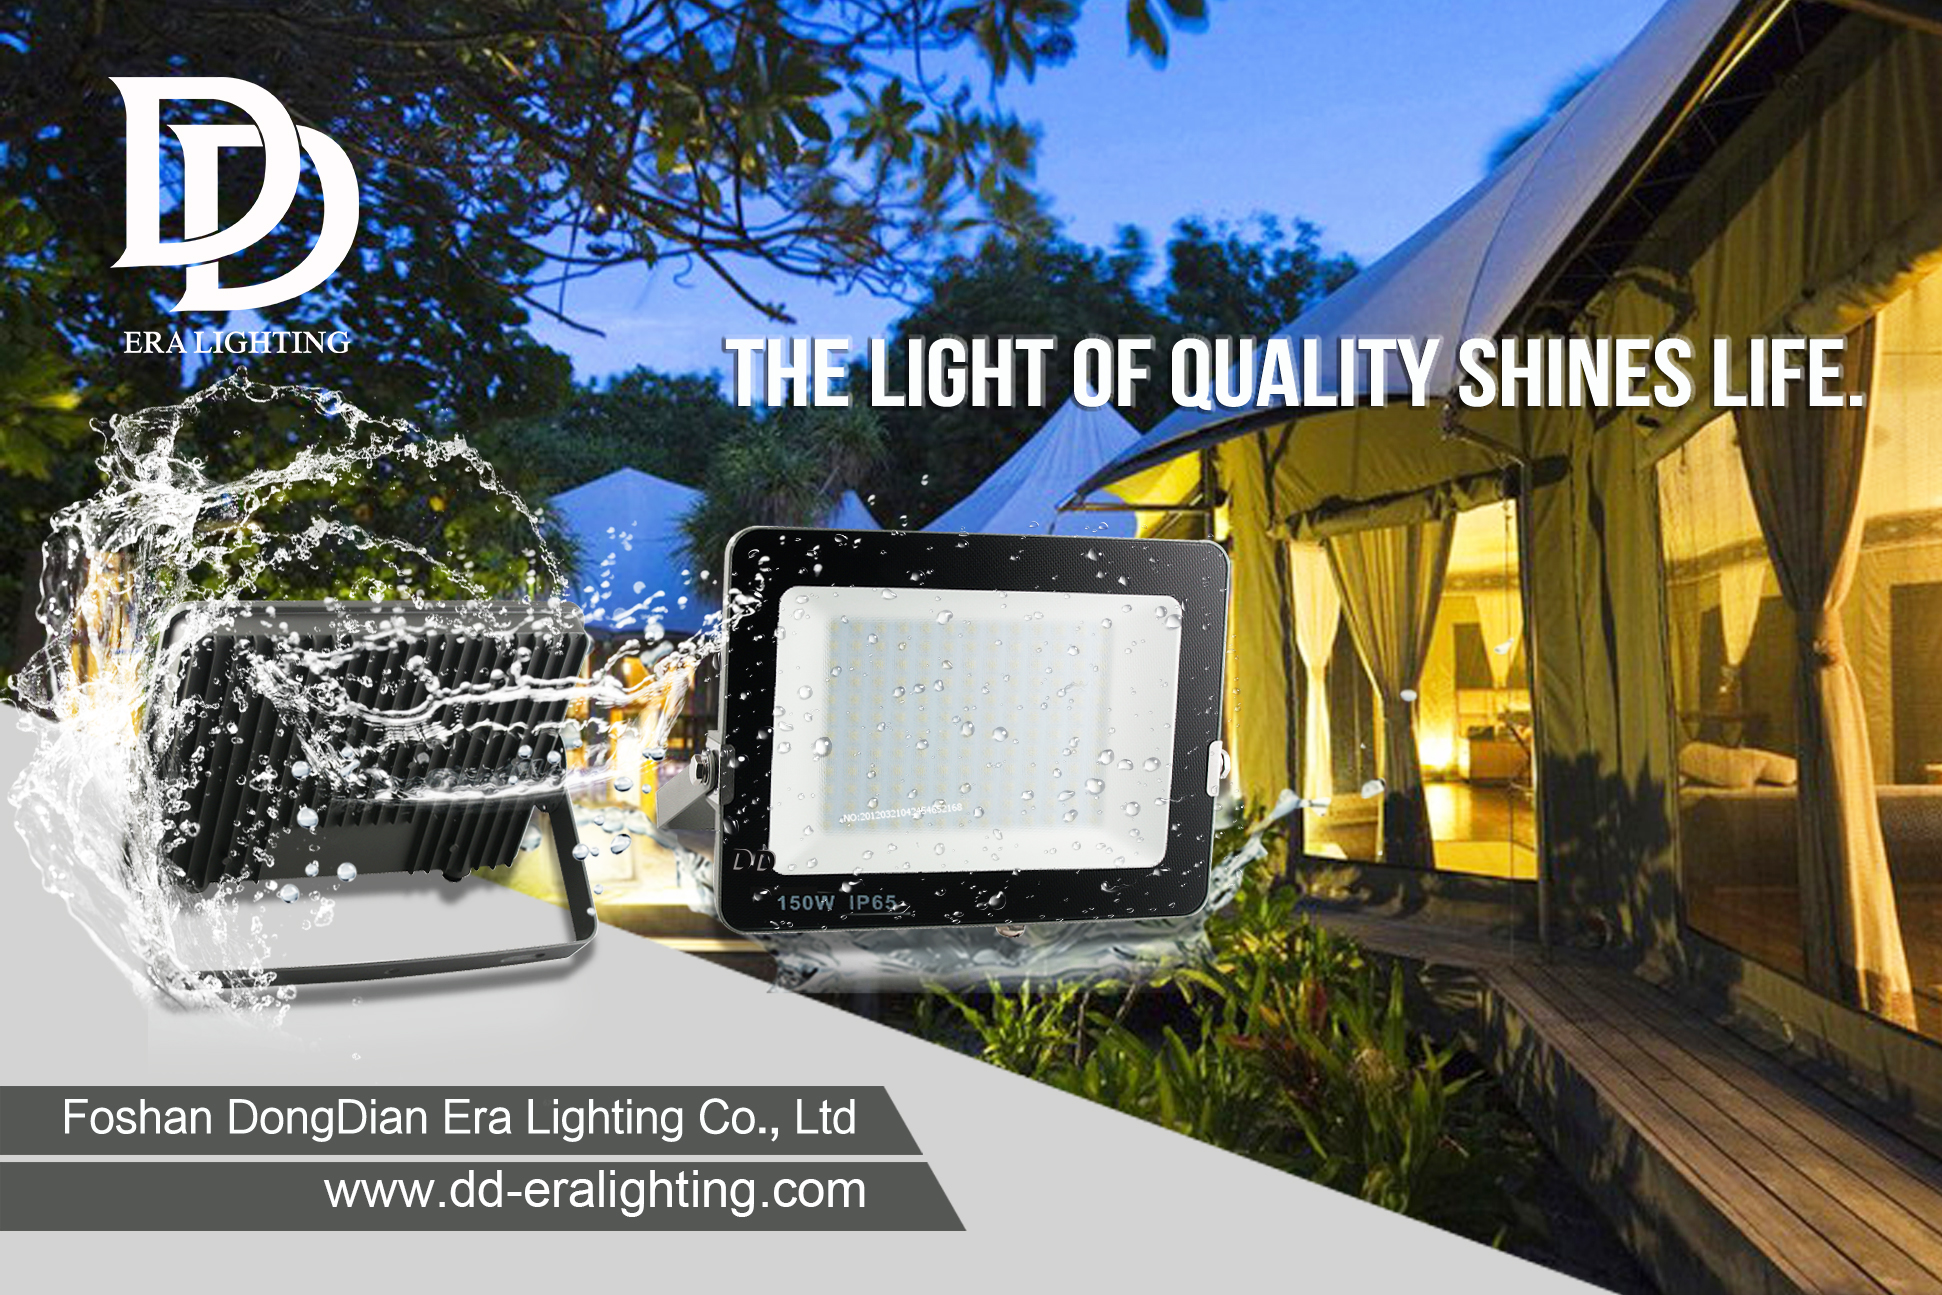 Bombilla LED | Ring amplía su iluminación inteligente con bombillas solares e interiores